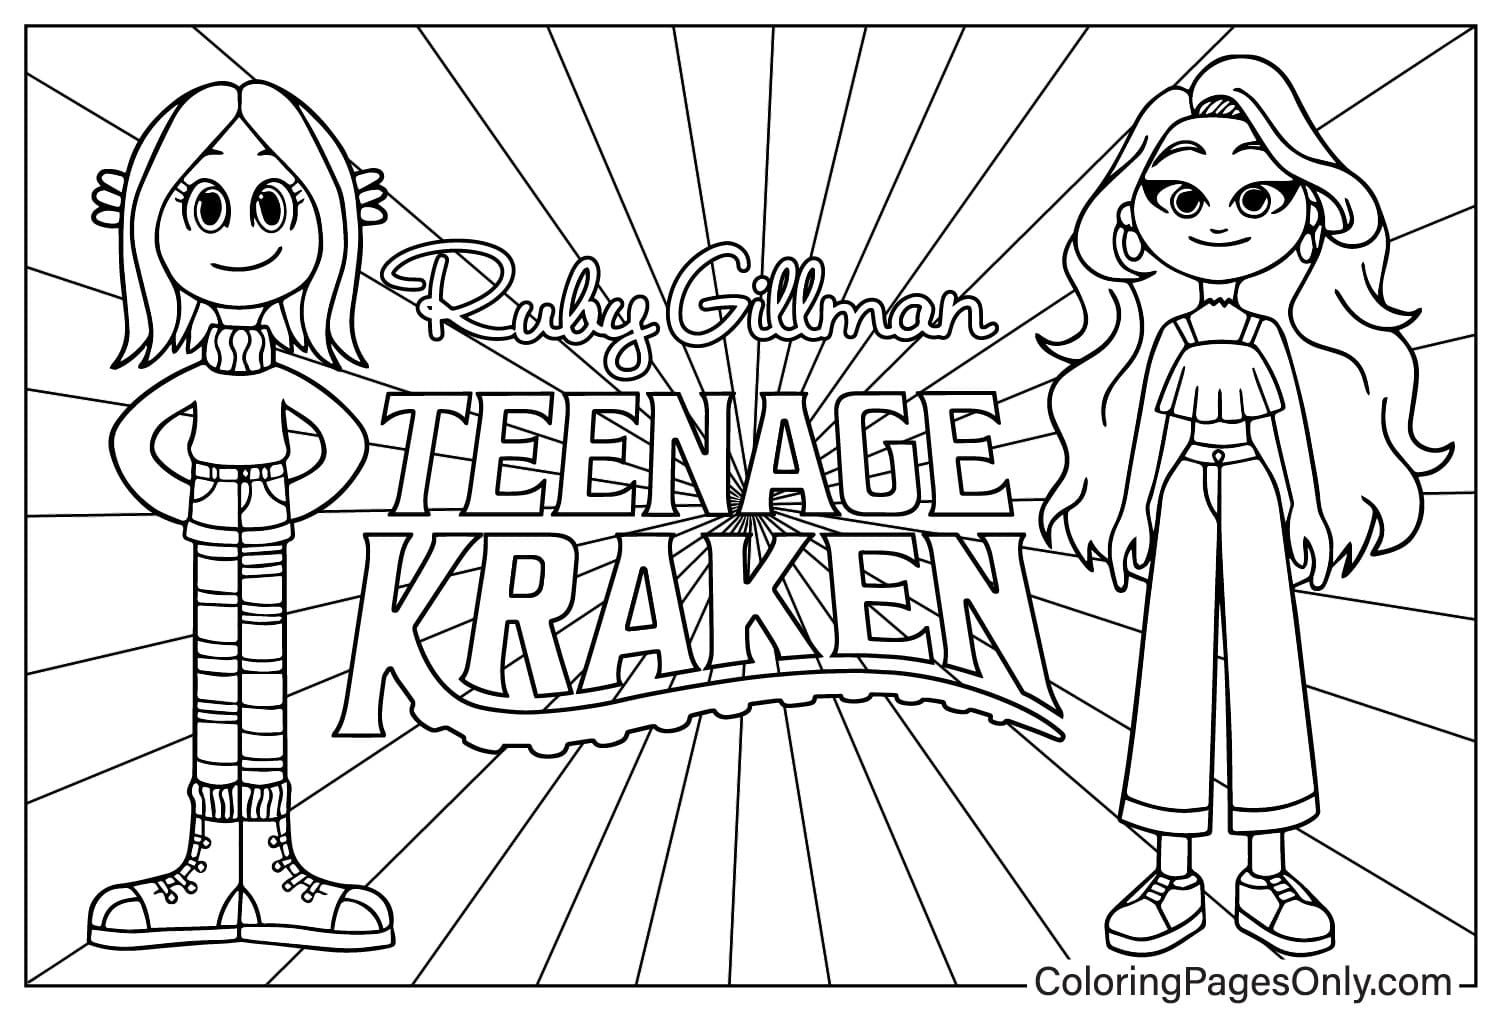 Página para colorir de Ruby Gillman e Chelsea de Ruby Gillman Teenage Kraken